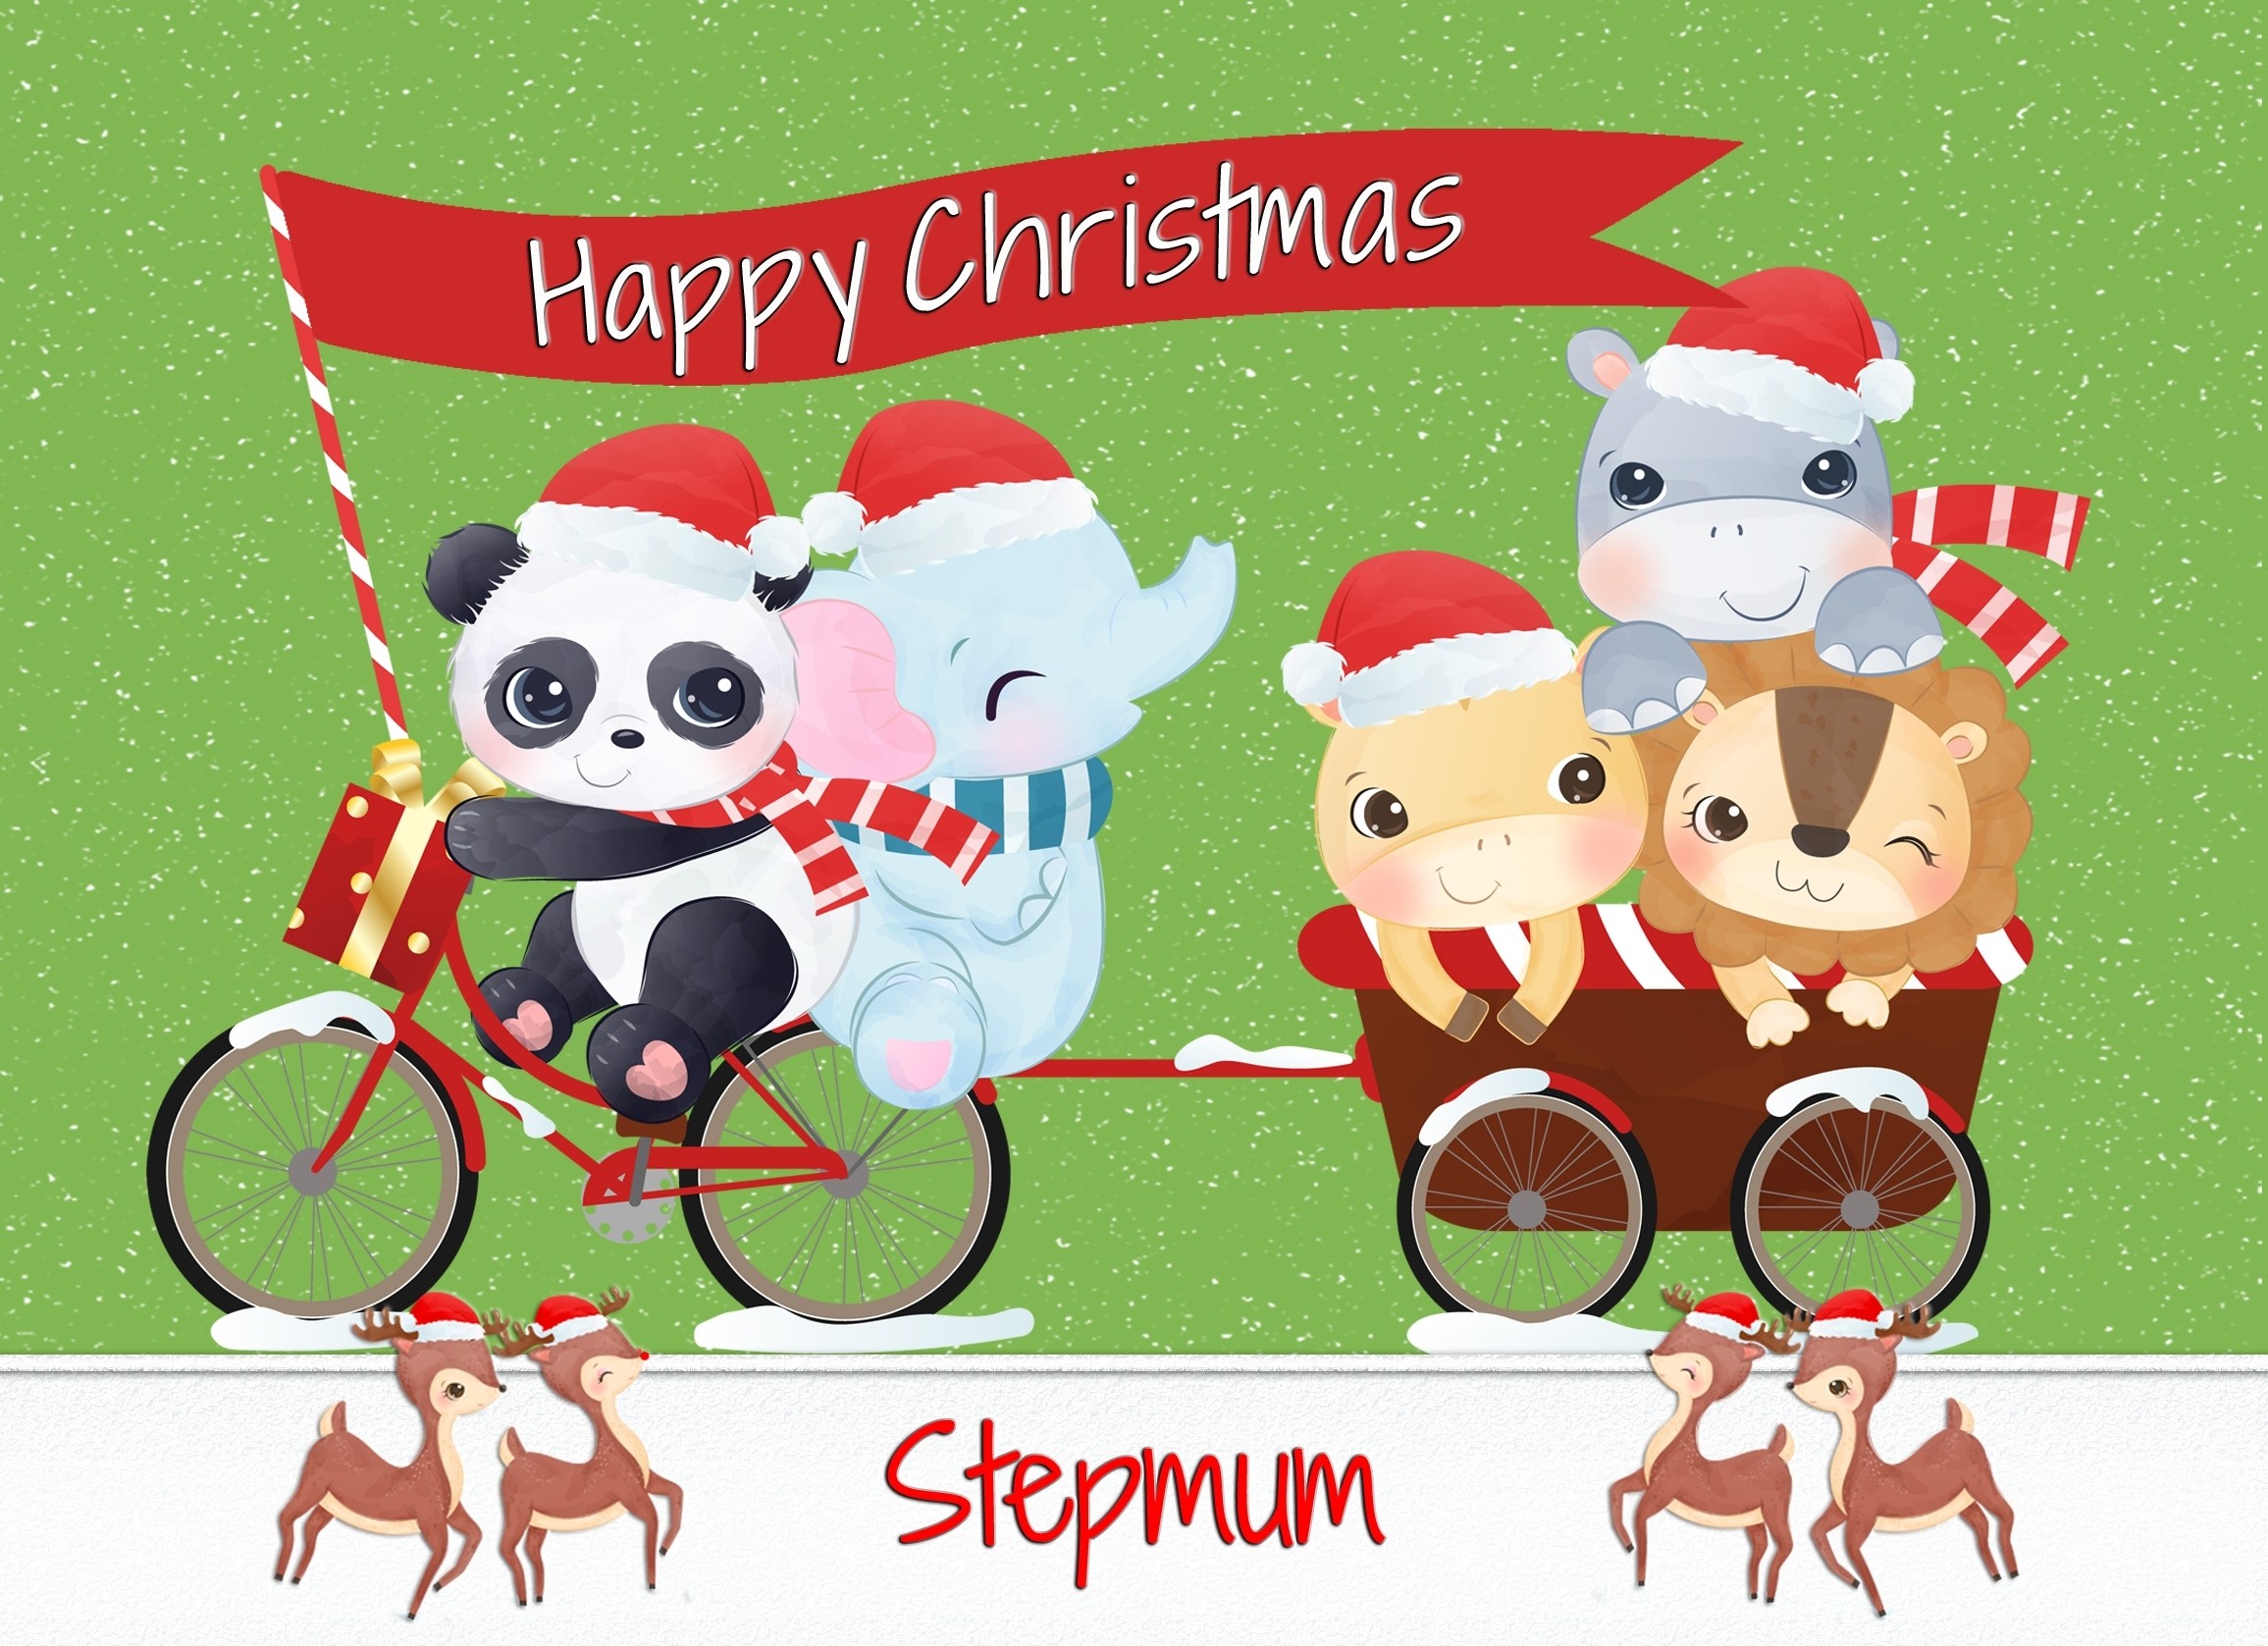 Christmas Card For Stepmum (Green Animals)